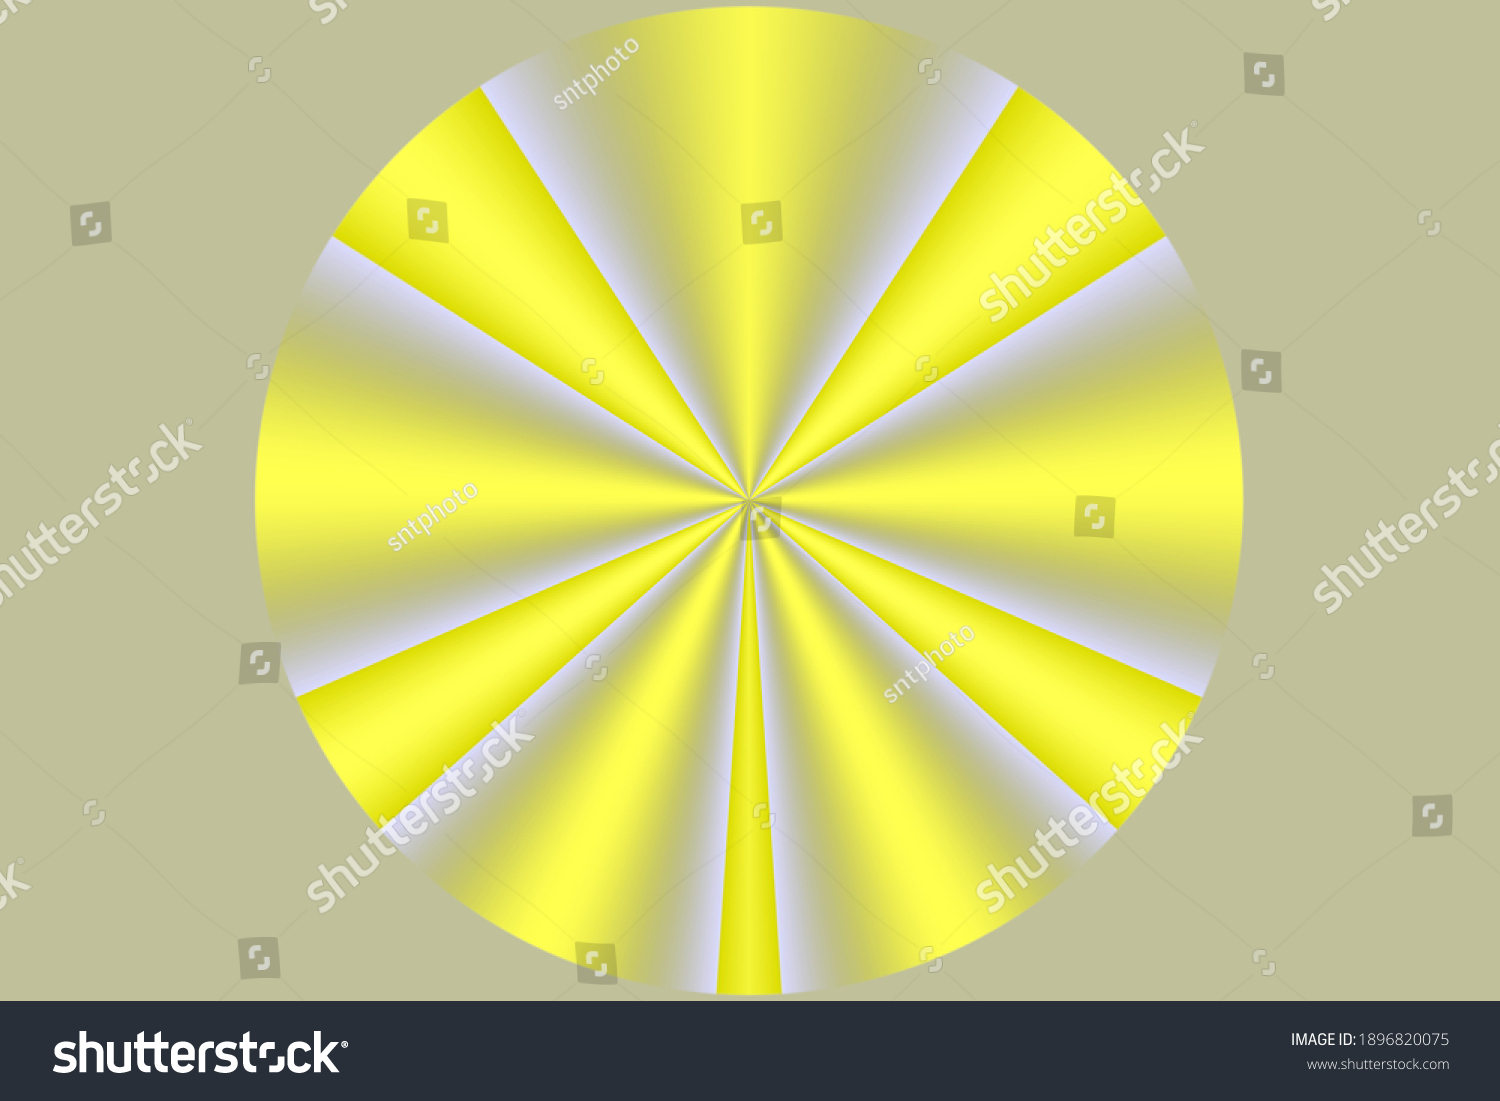 Sphere Yellow Gradient Texture Design On Stock Illustration 1896820075 ...